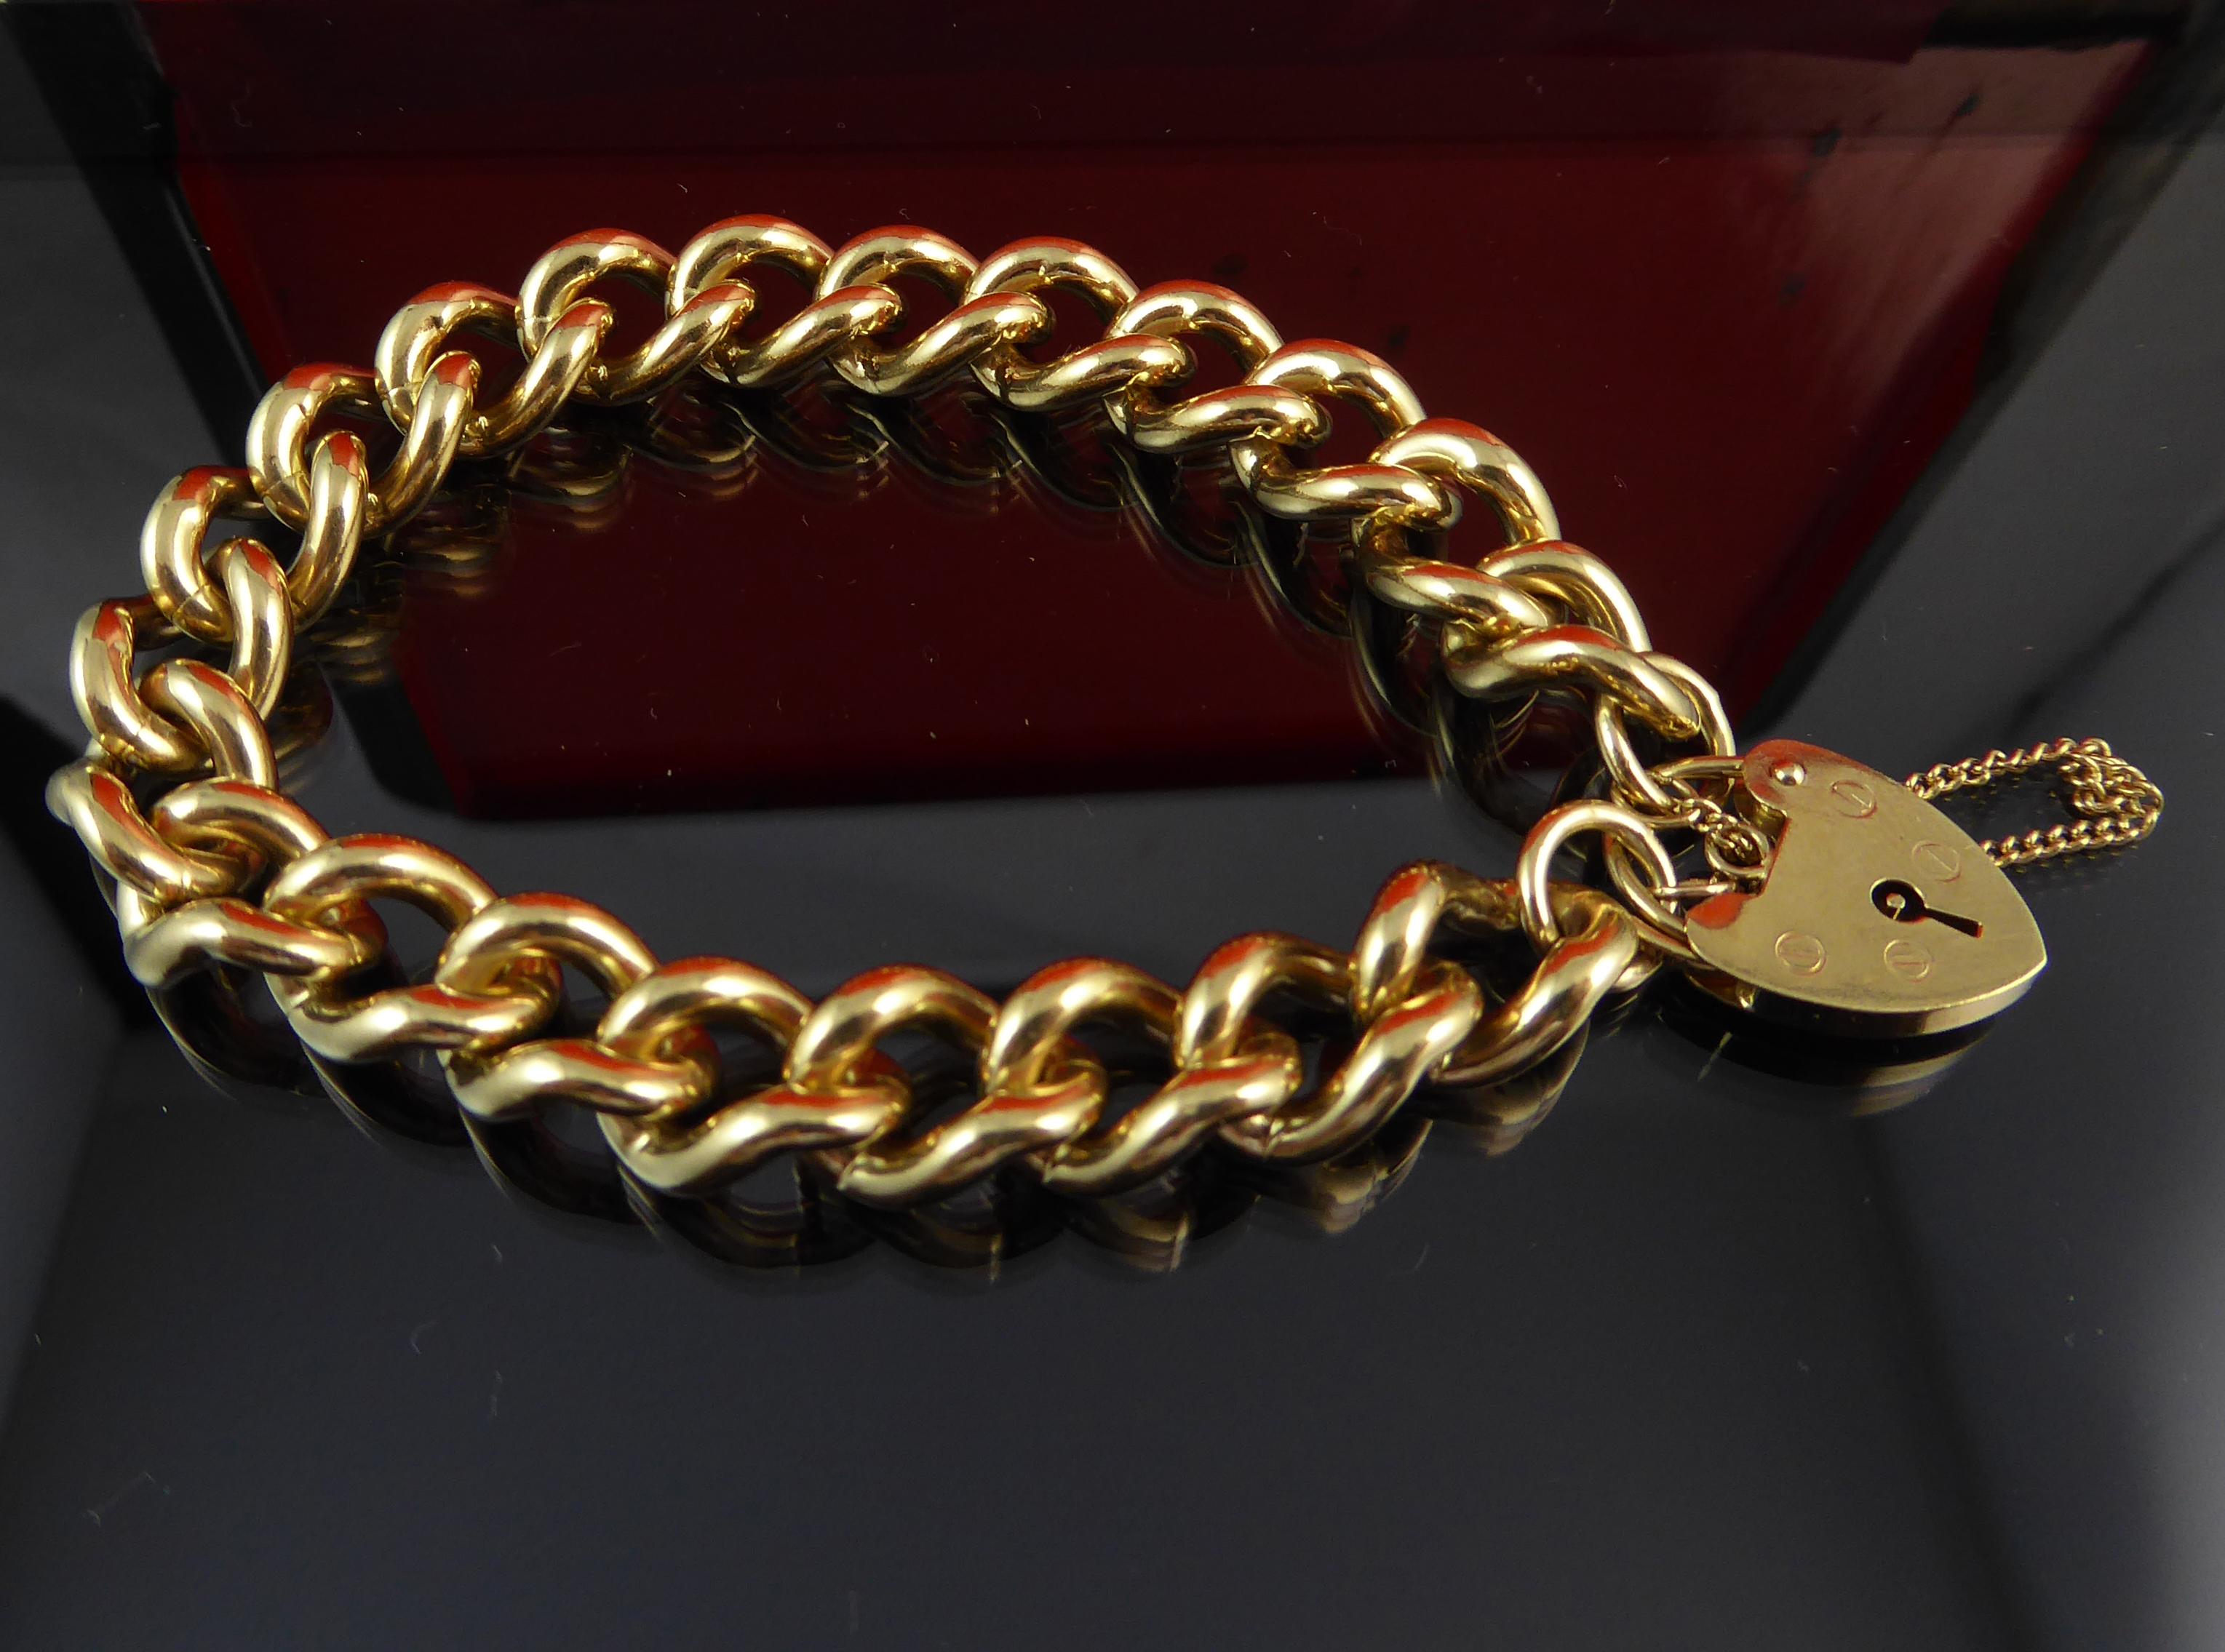 Woman's or Men's Vintage Gold Curb Link Bracelet, Padlock Closure, Yellow Gold 5